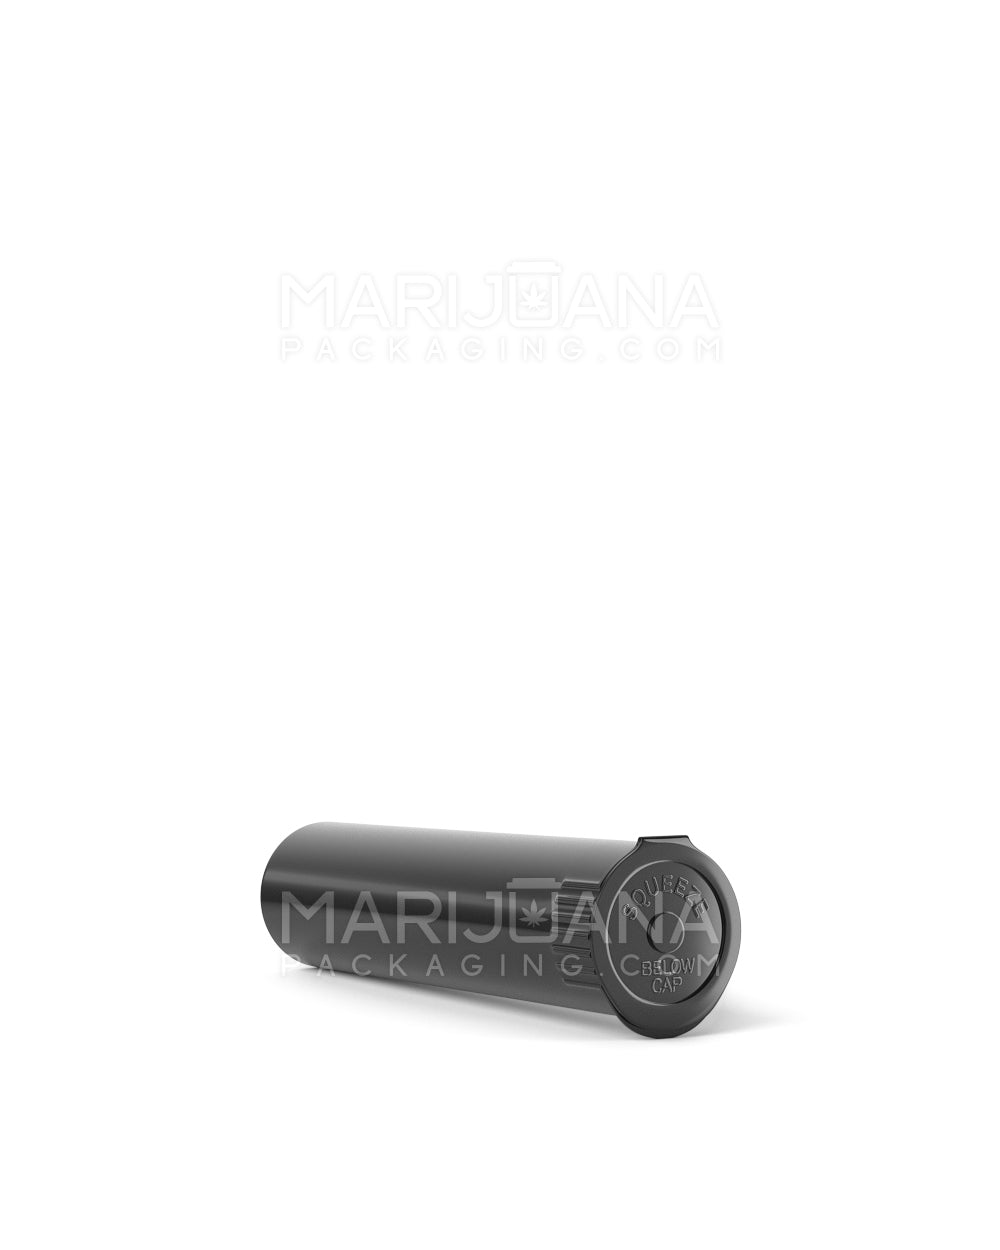 Child Resistant | Pop Top Opaque Plastic Pre-Roll Tubes | 78mm - Black - 1200 Count - 5